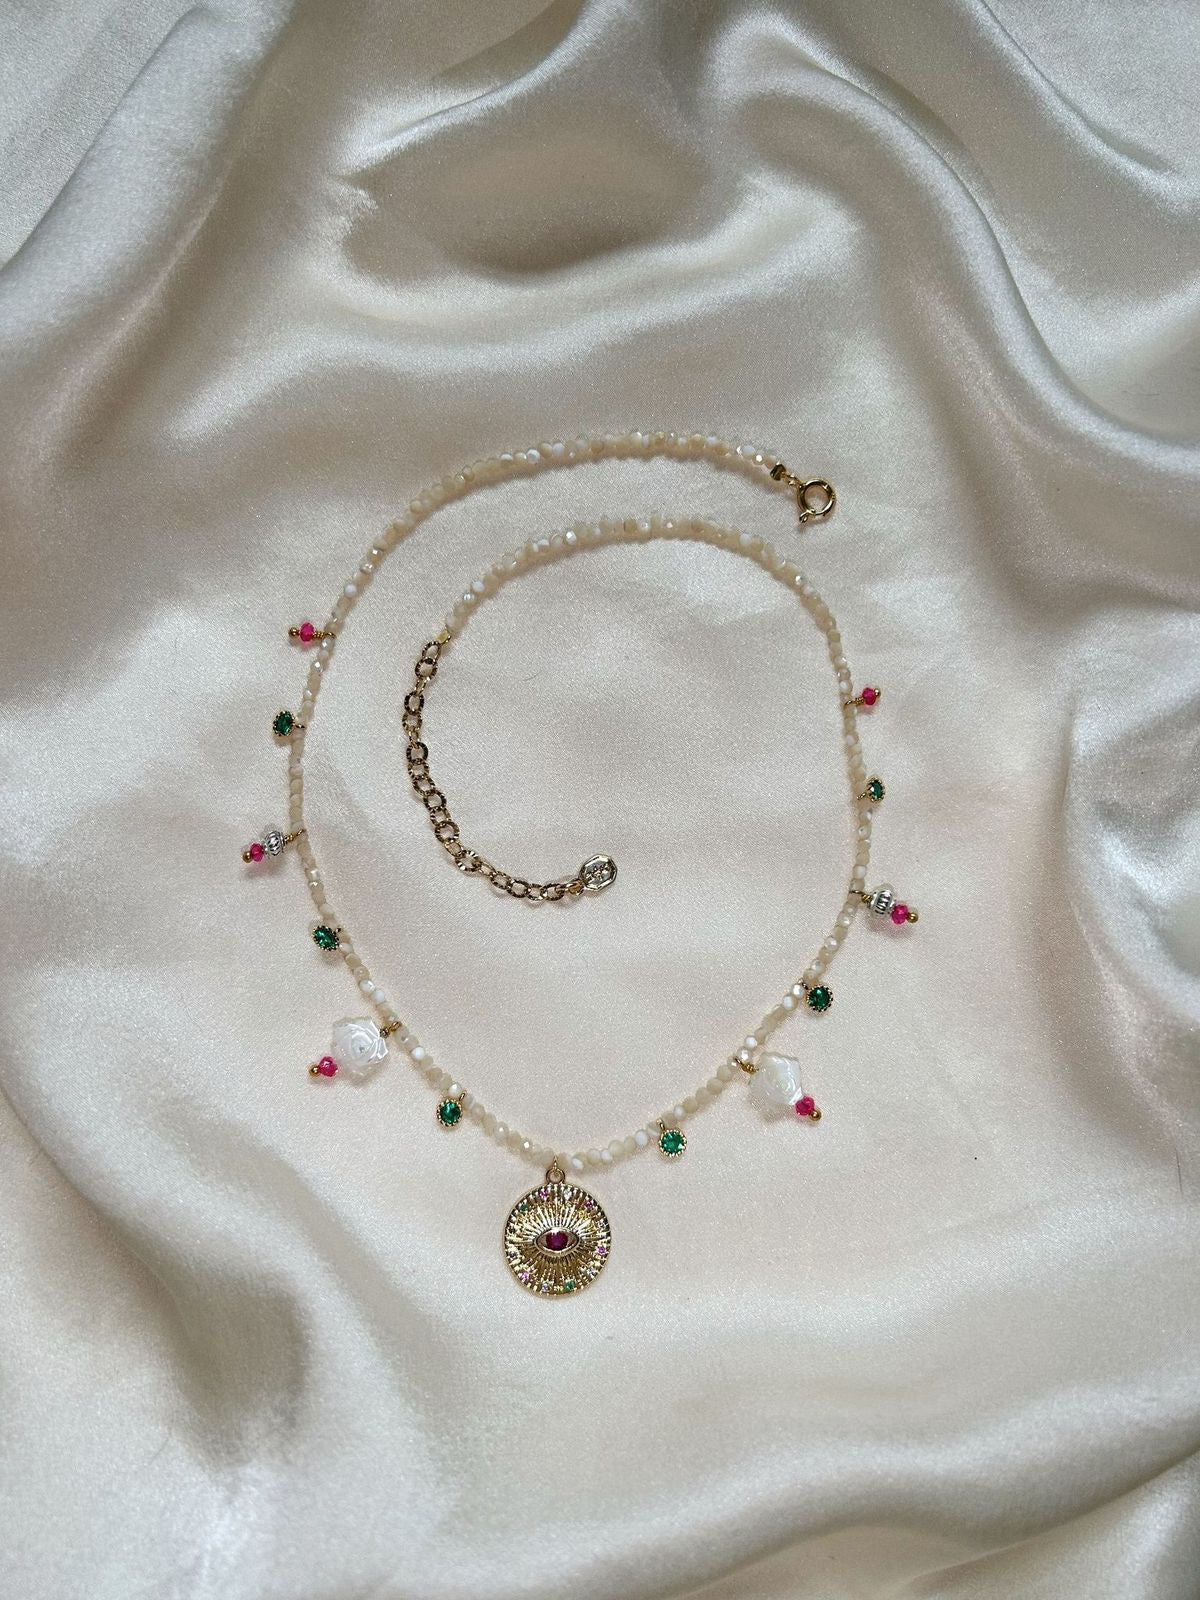 #necklace #collier #bijoux #jelwery #jewellery #bali #cristal #chic #glamour #gold #perles #pendentif #fleur #shine #blanc #red #summer #été #oeil #bonheur